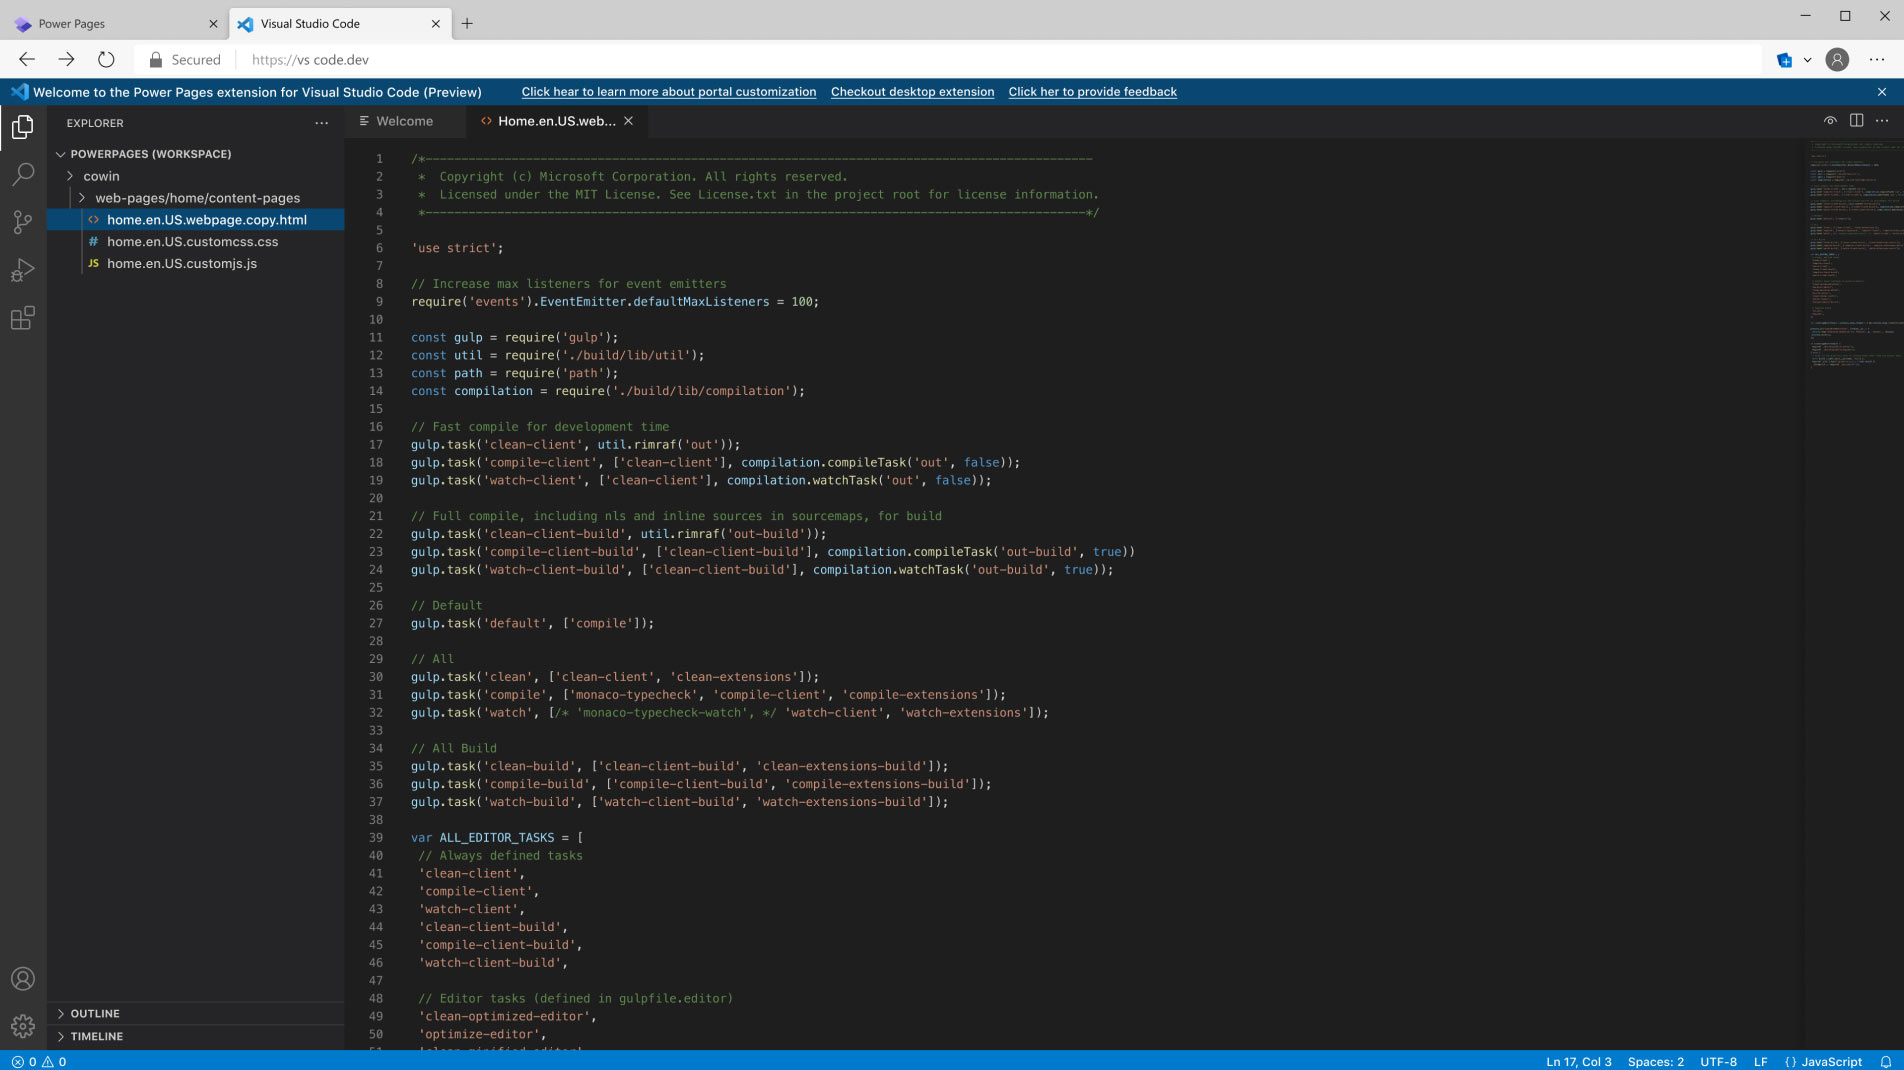 Aplicación Power Pages con extensión a Visual Studio Code